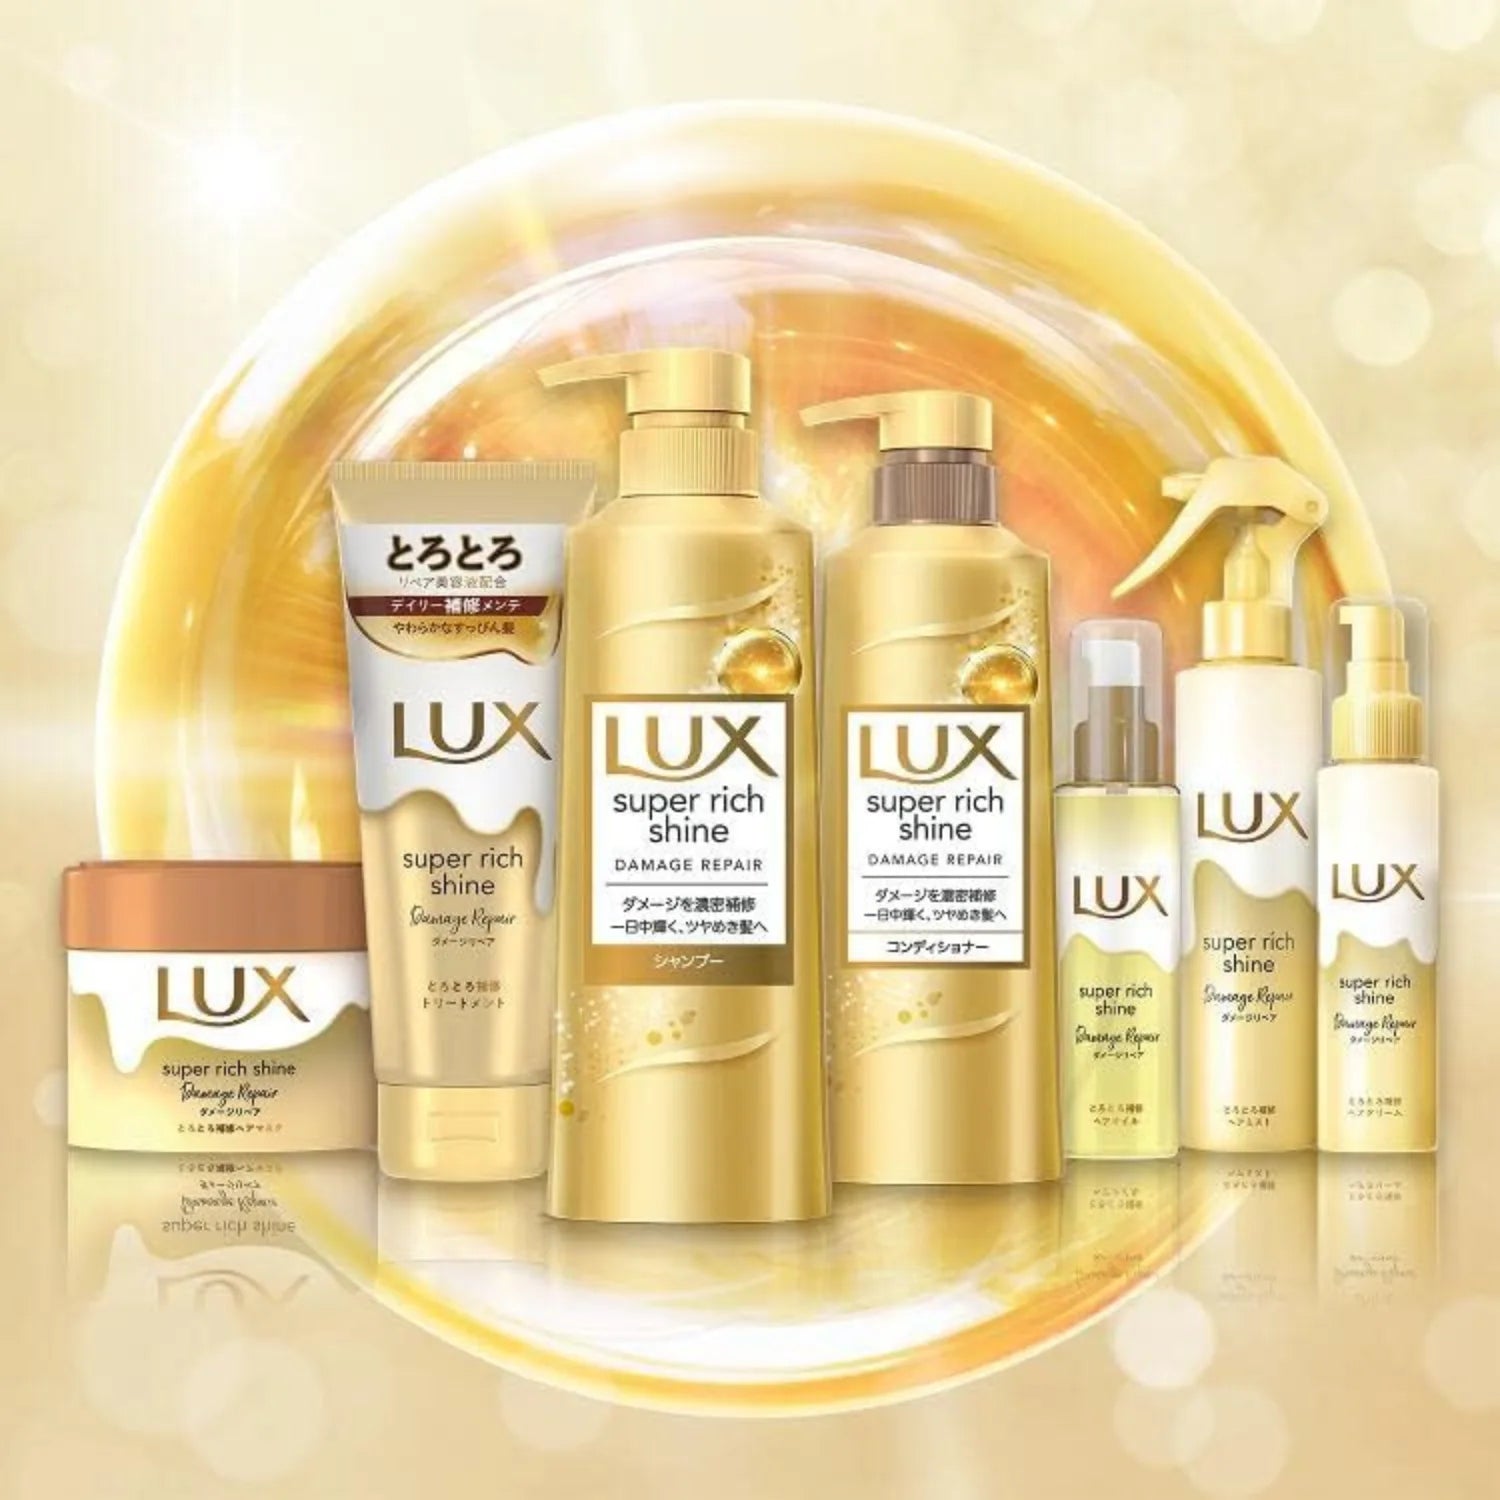 Lux Japan Super Rich Shine Shampoo & Conditioner 400ml Each - Buy Me Japan